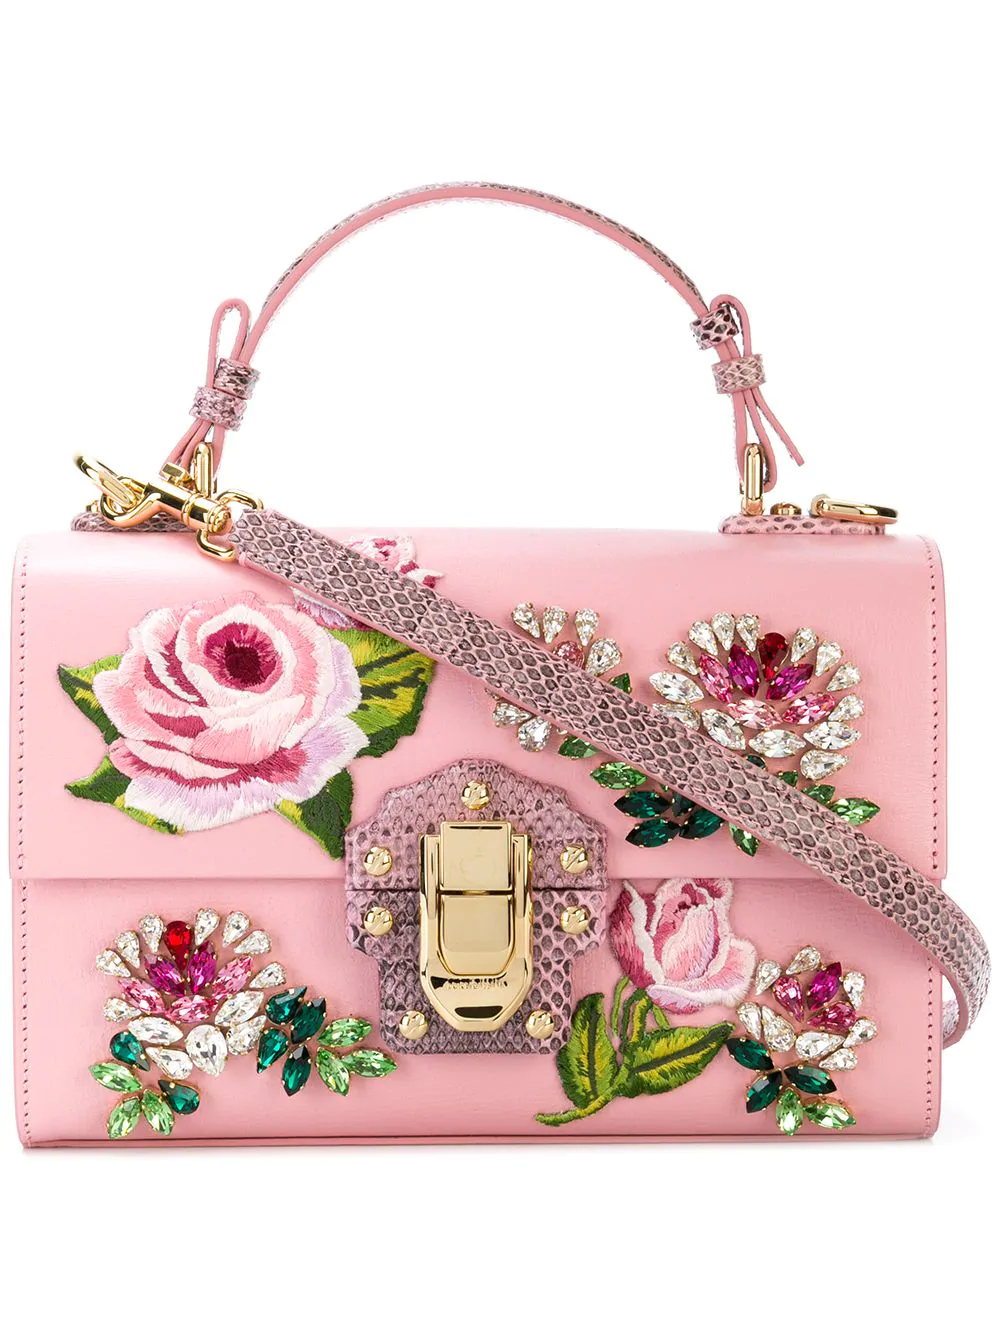 Dolce & Gabbana Lucia Tote Bag - Pink | ModeSens